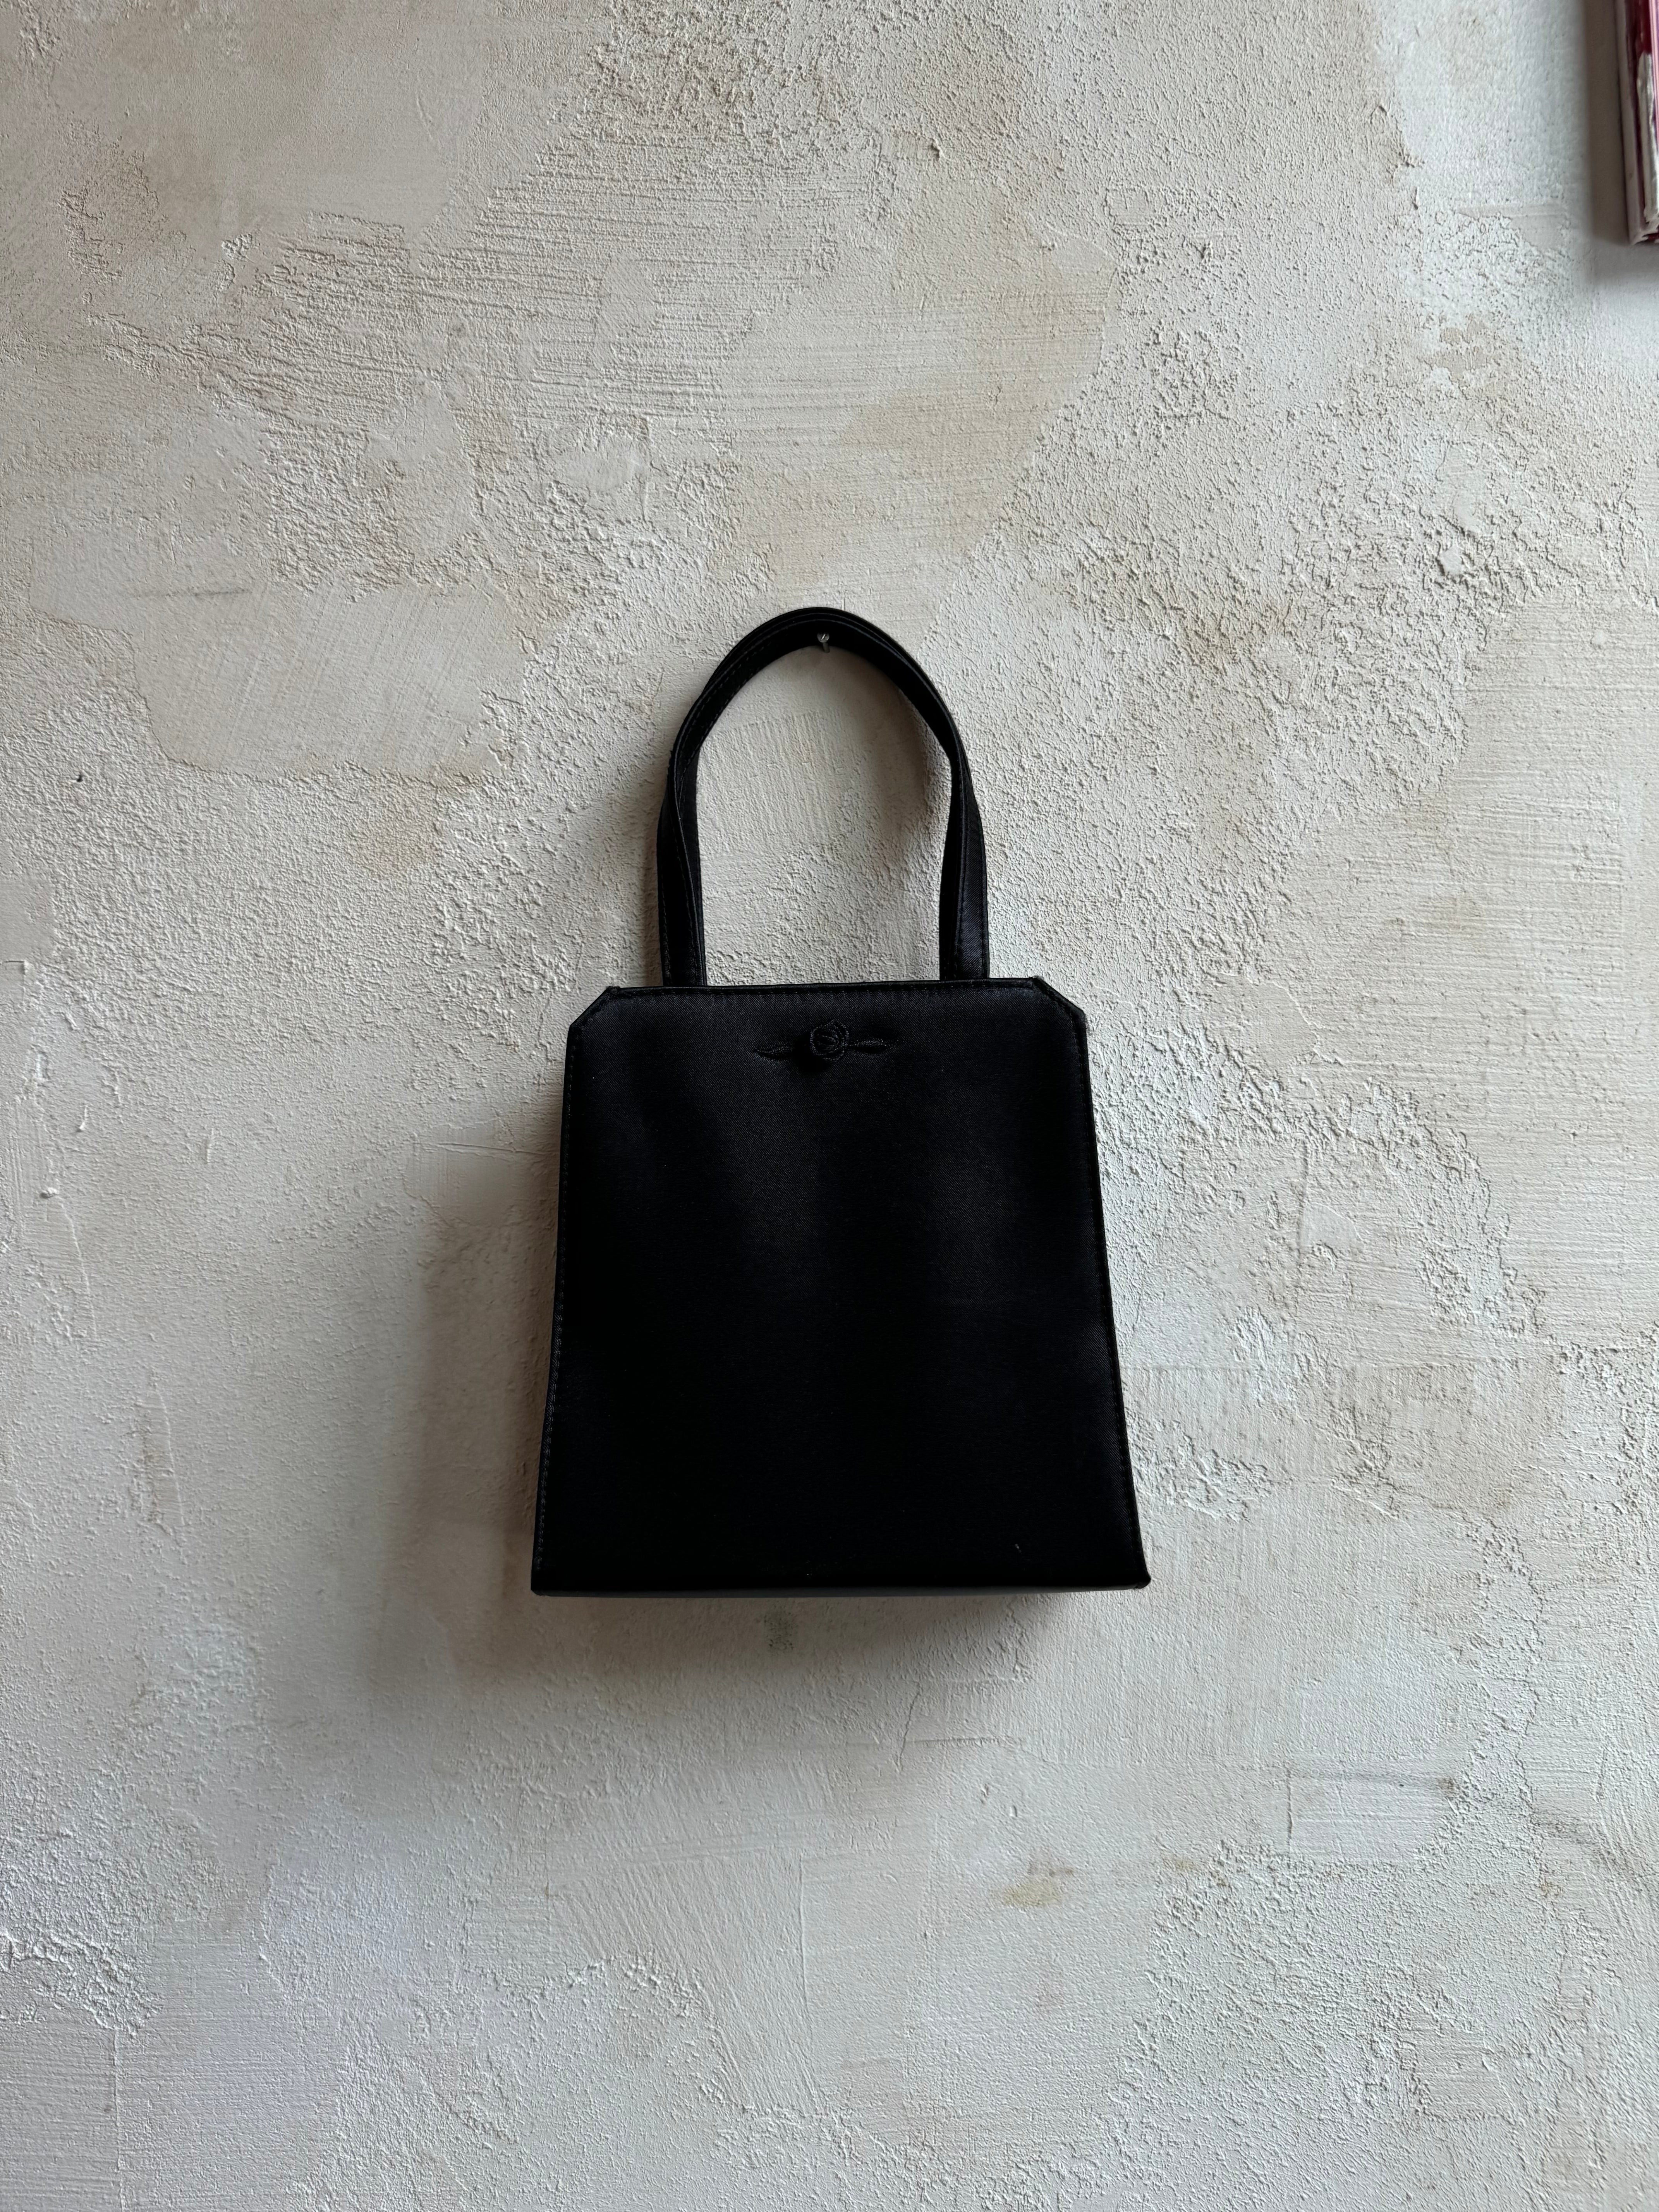 Satin Black Bag With Rosette